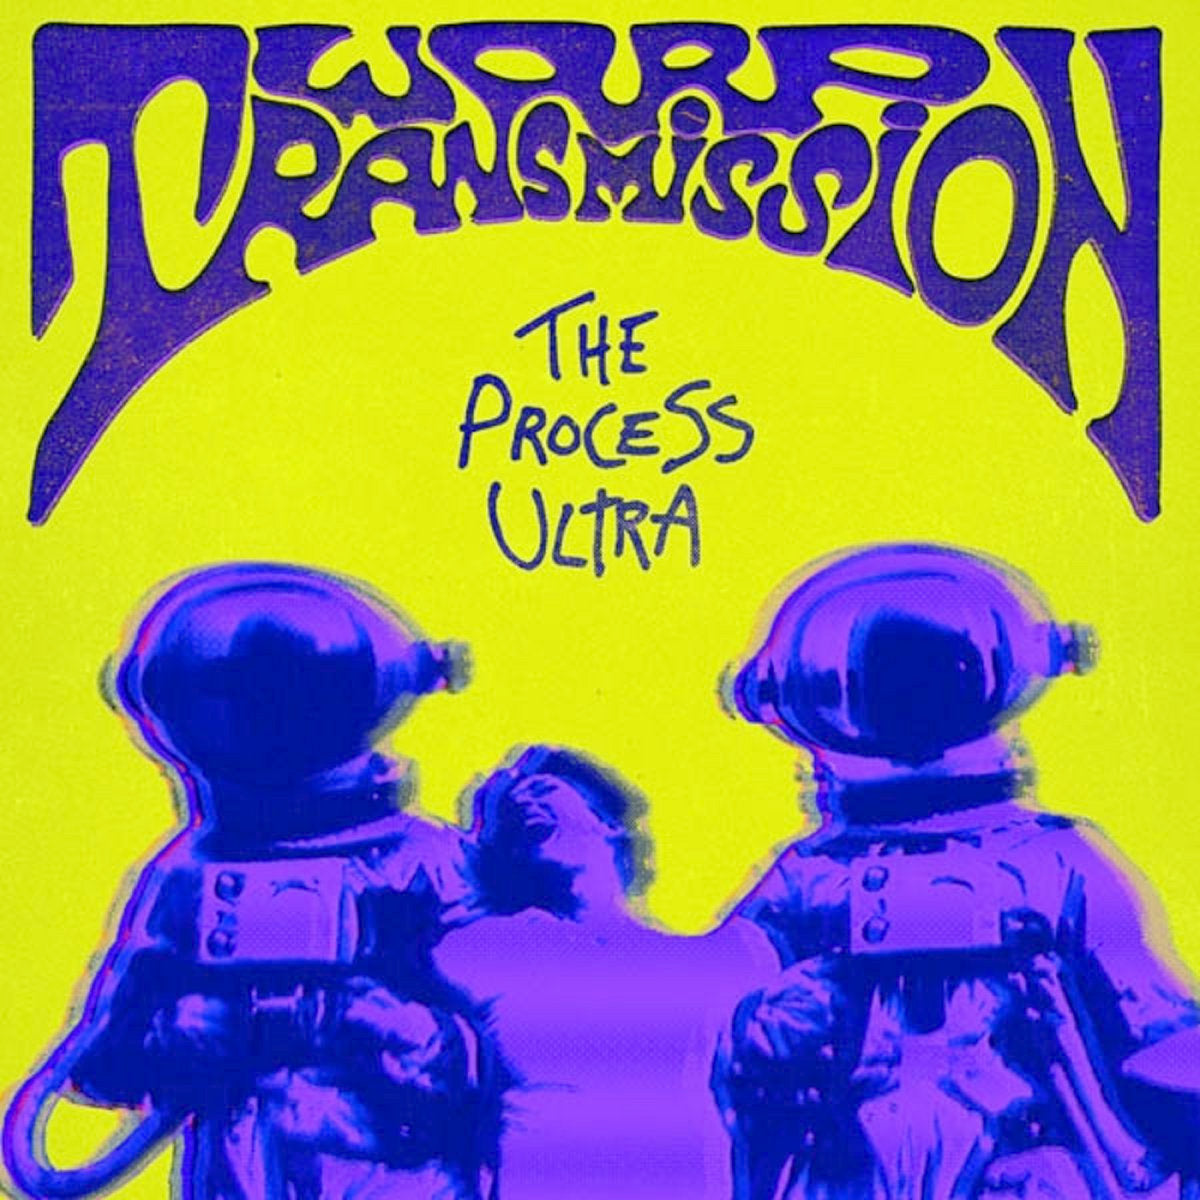 Arcade Sound - Warp Transmission - The Process Ultra - LP / CD image